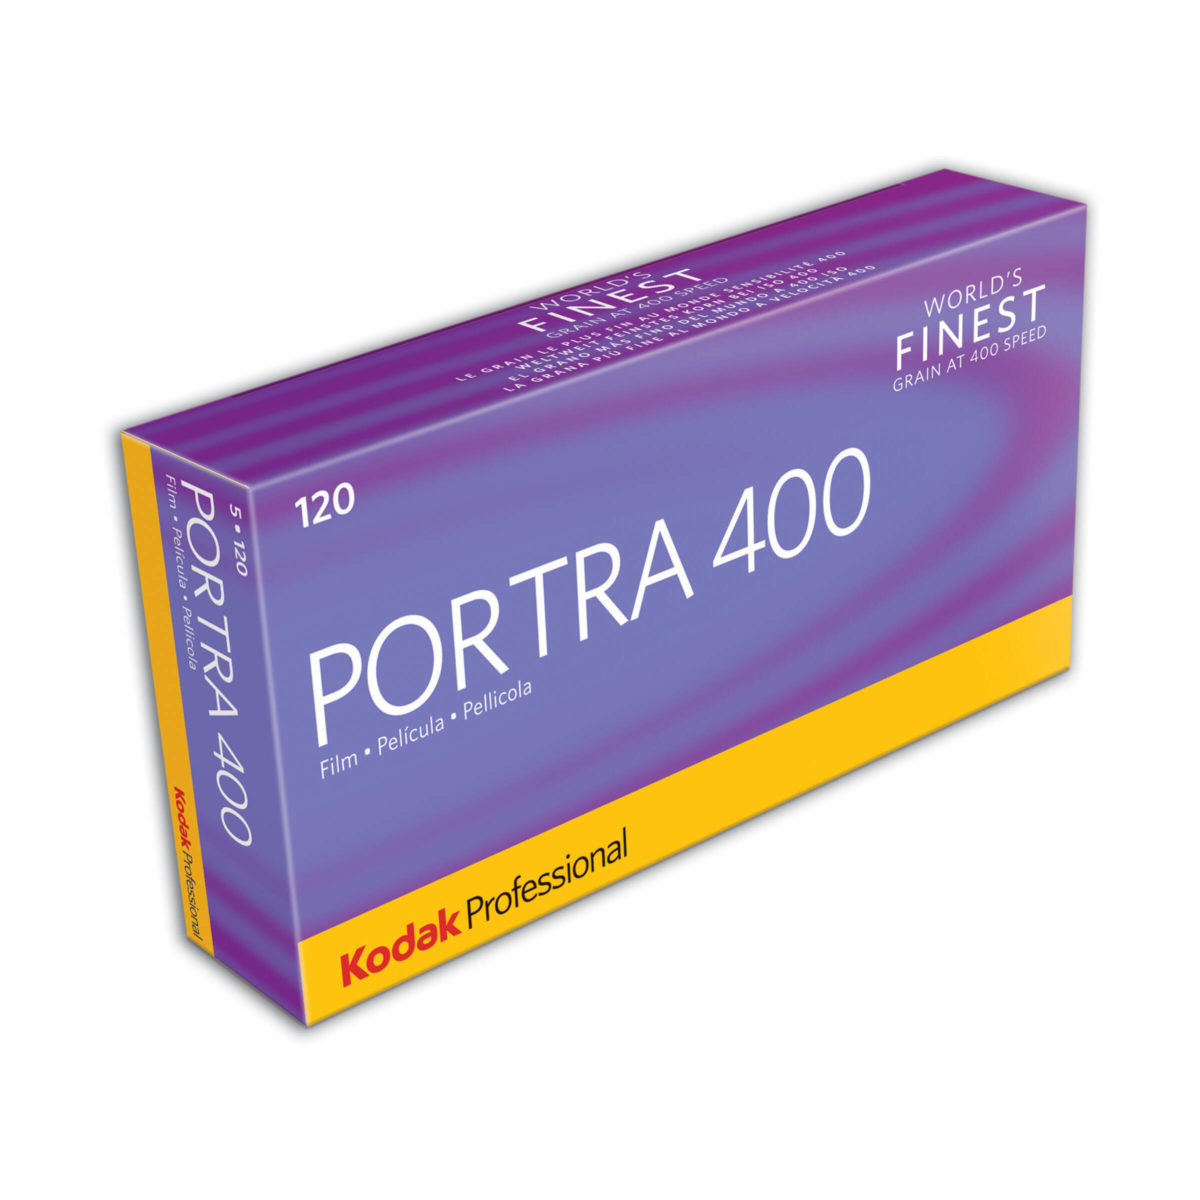 kodak_professional_portra_400_5er_packung_120_01